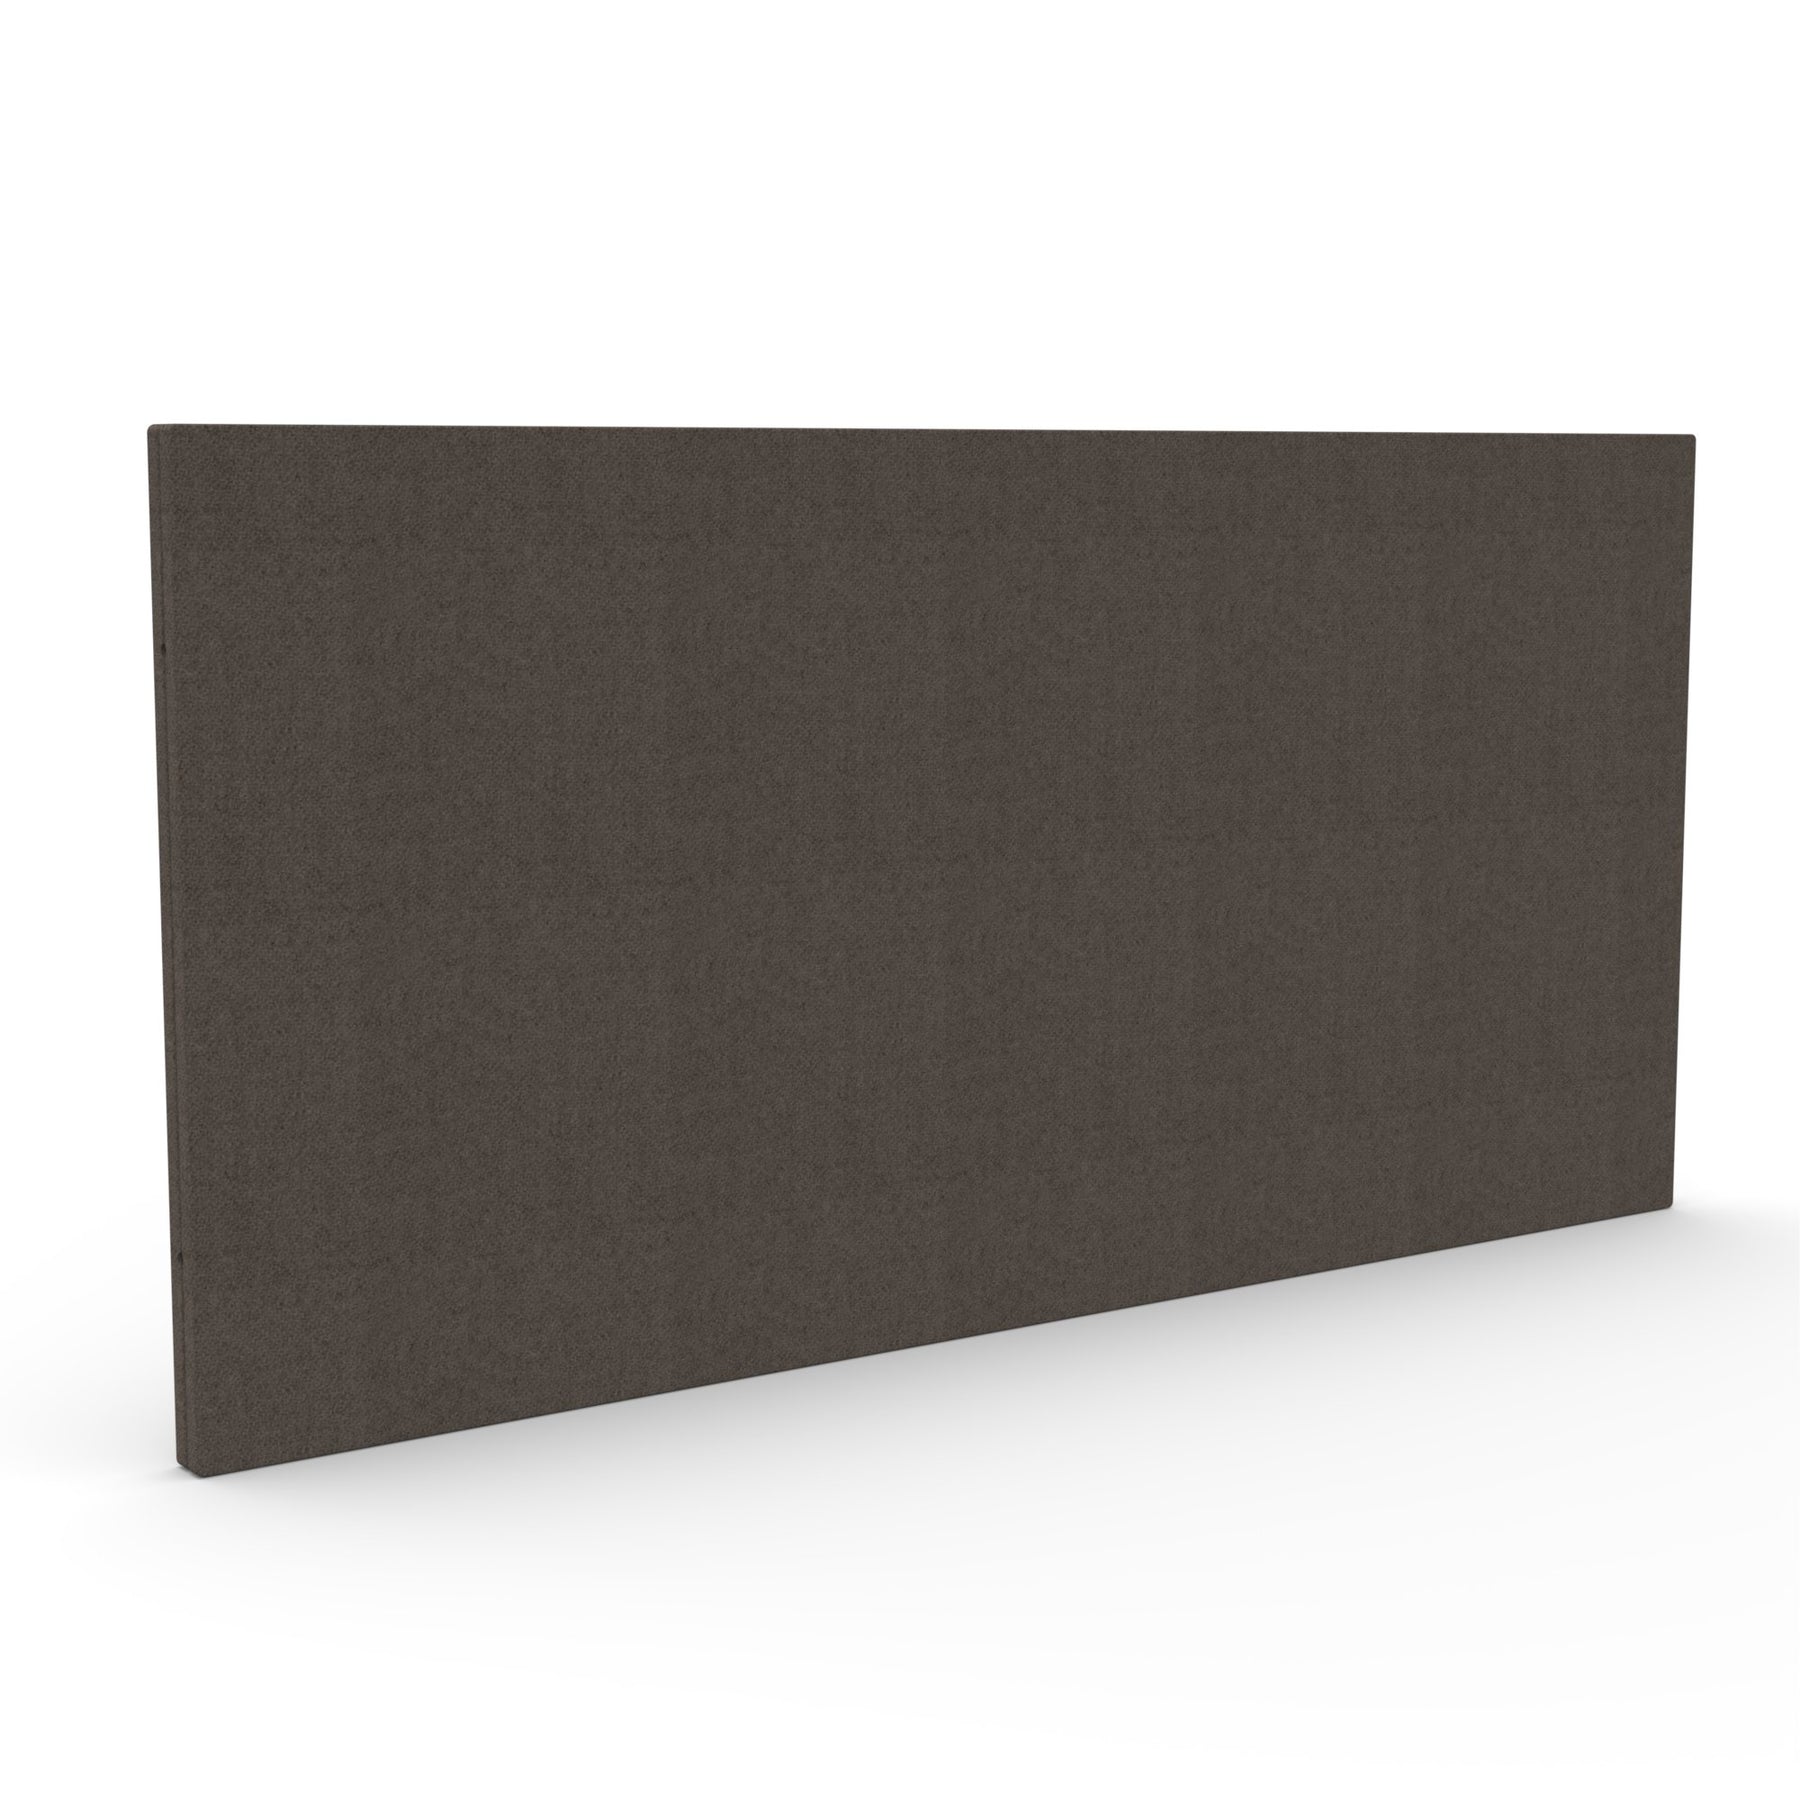 Fabric Infill Panel 80x40cm